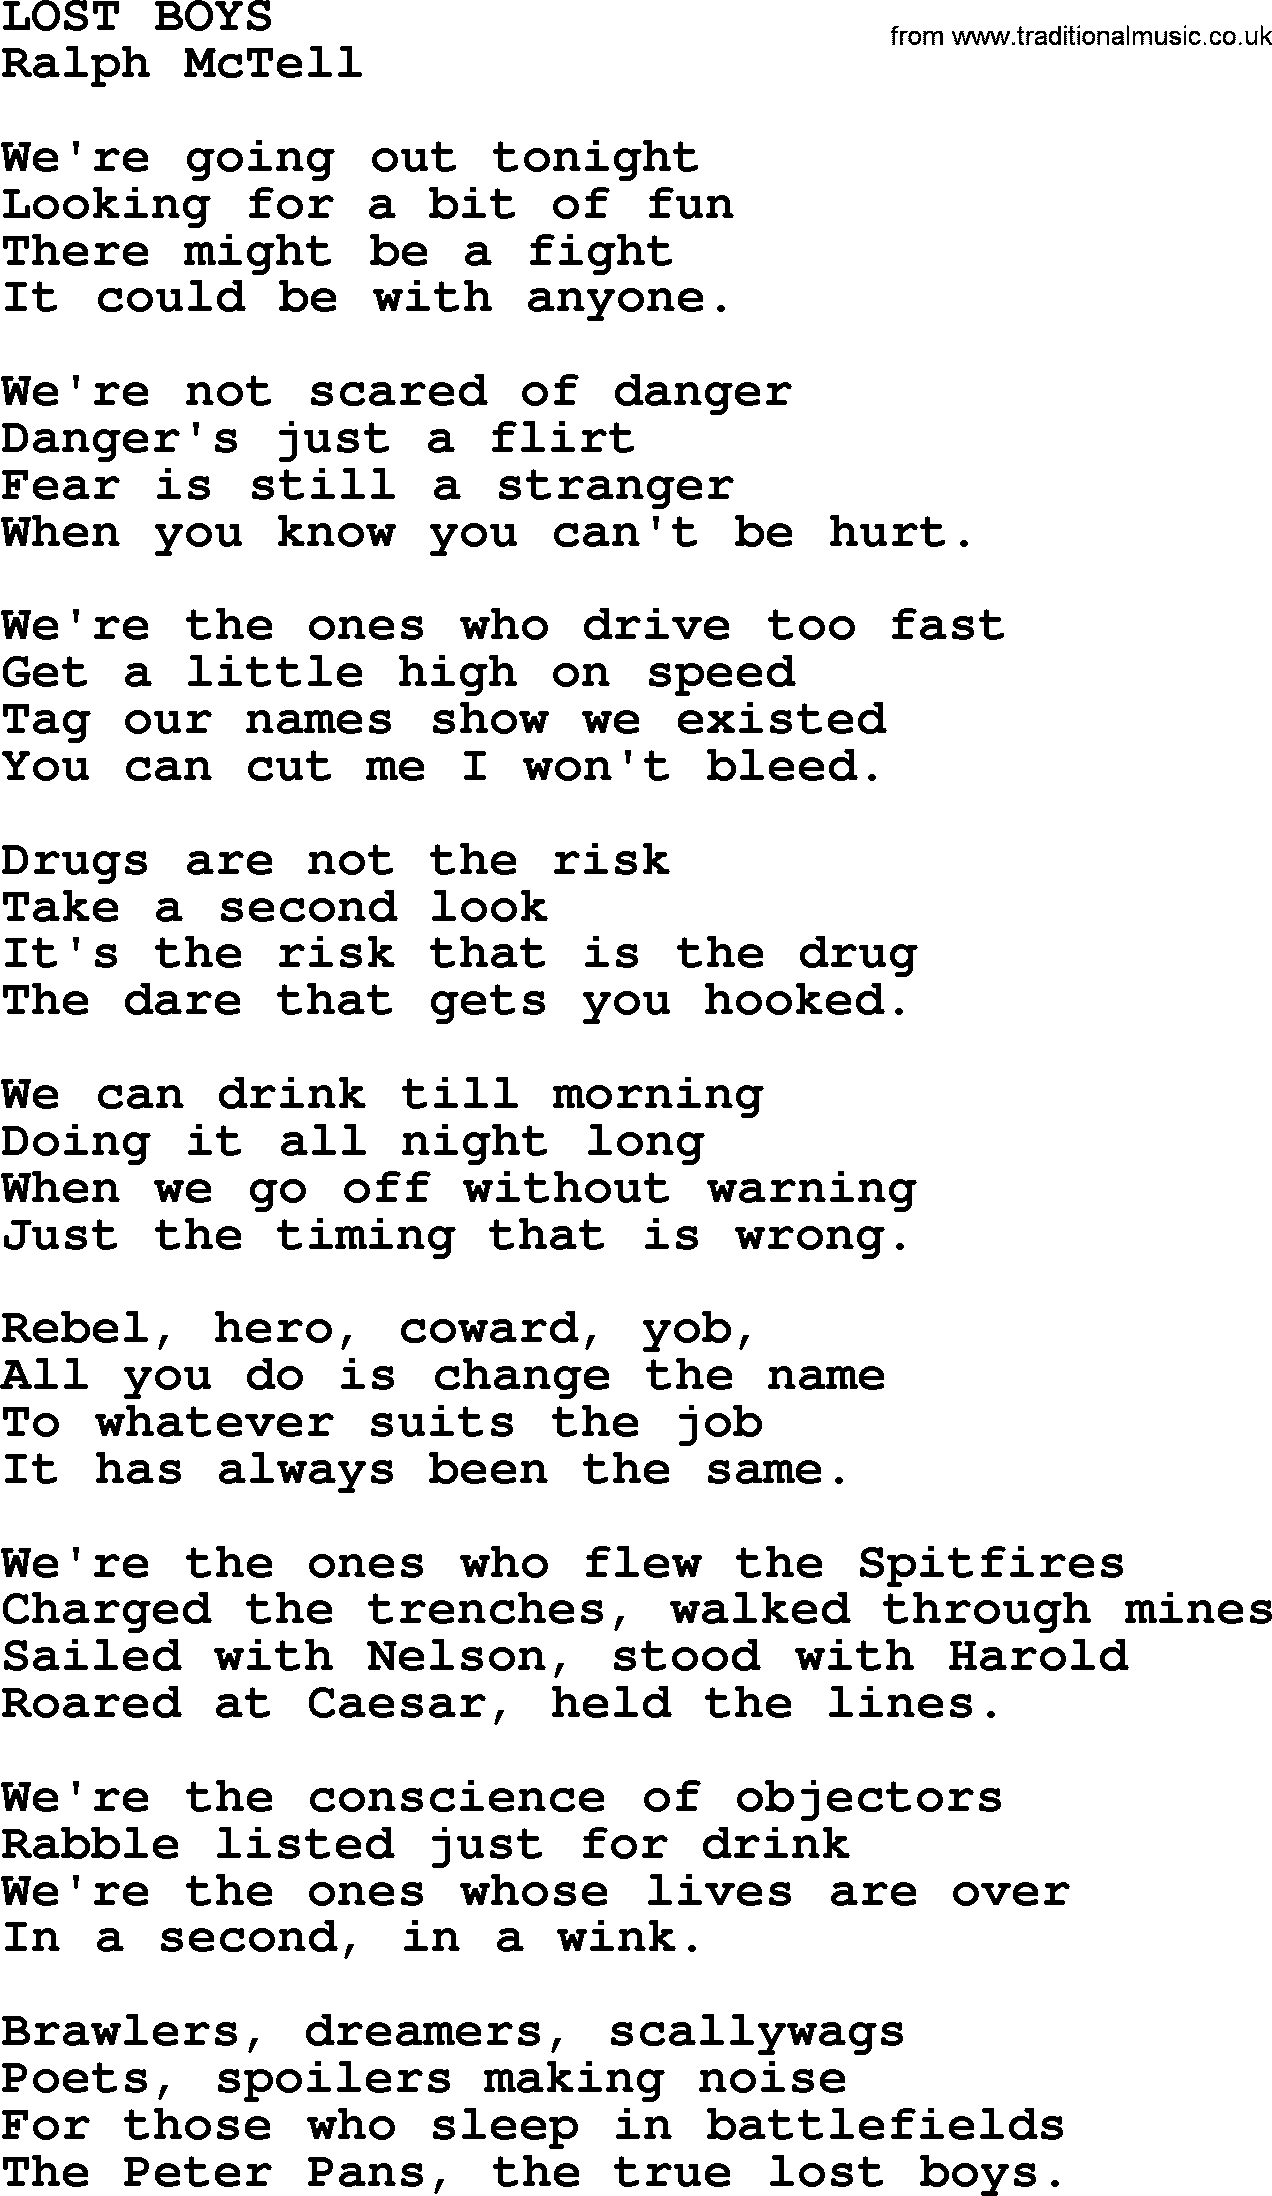 Ralph McTell Song: Lost Boys, lyrics